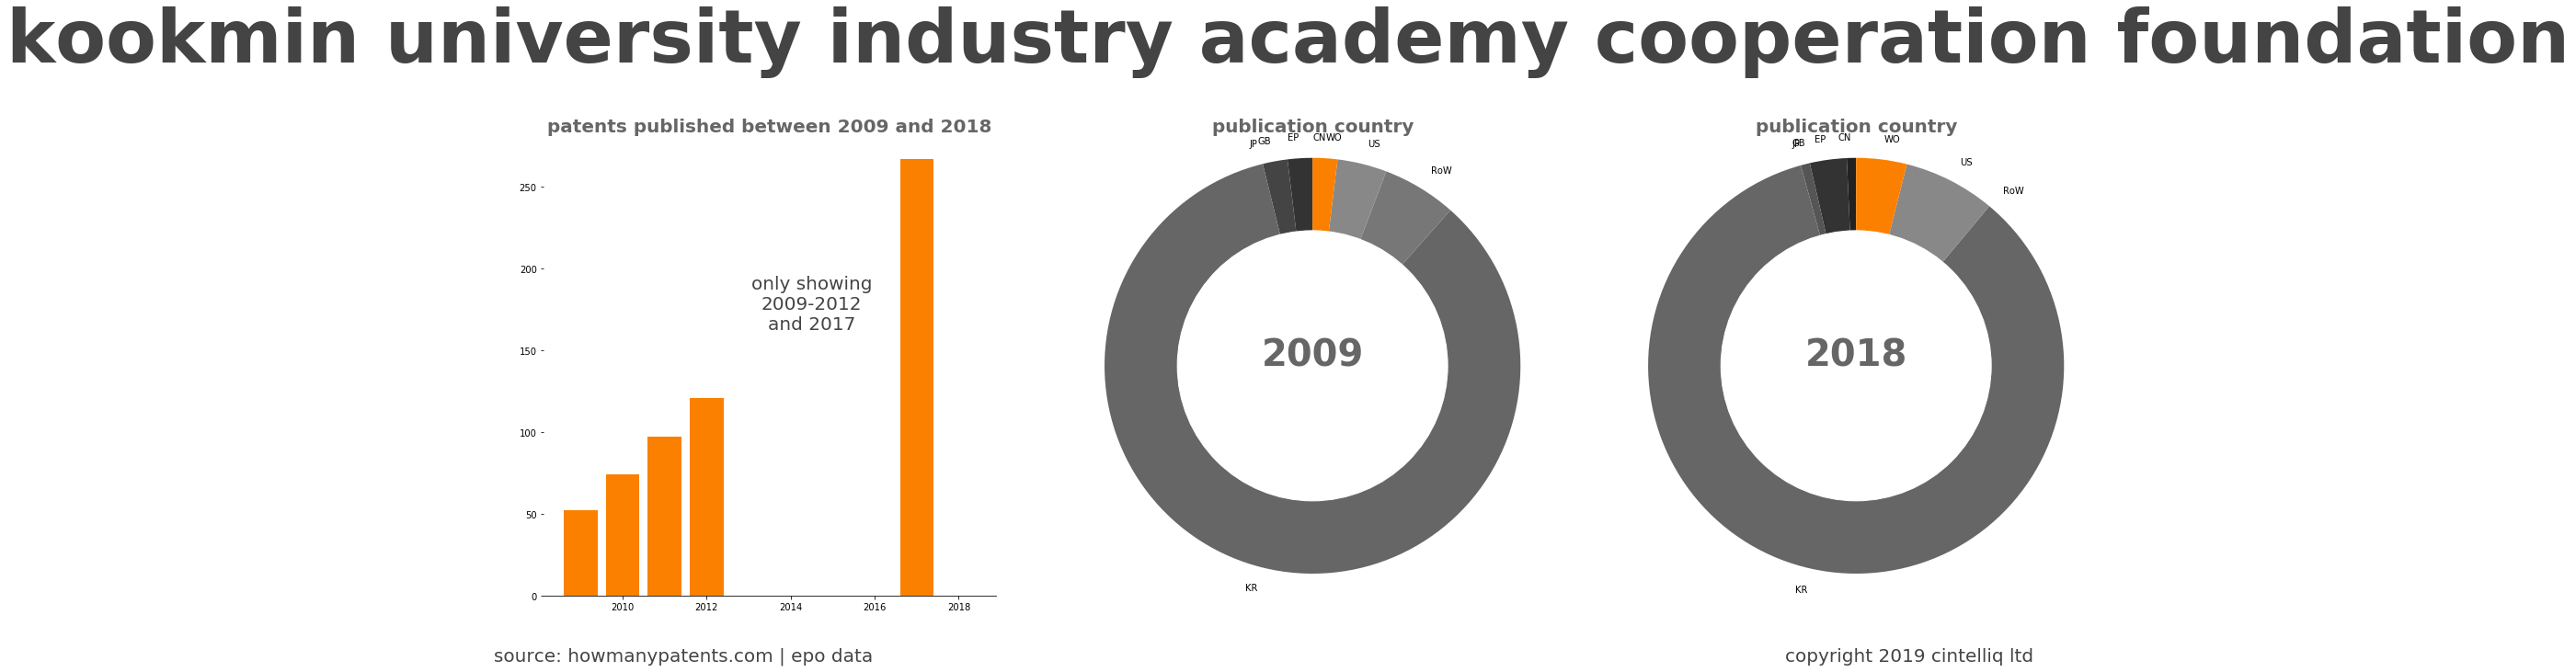 summary of patents for Kookmin University Industry Academy Cooperation Foundation